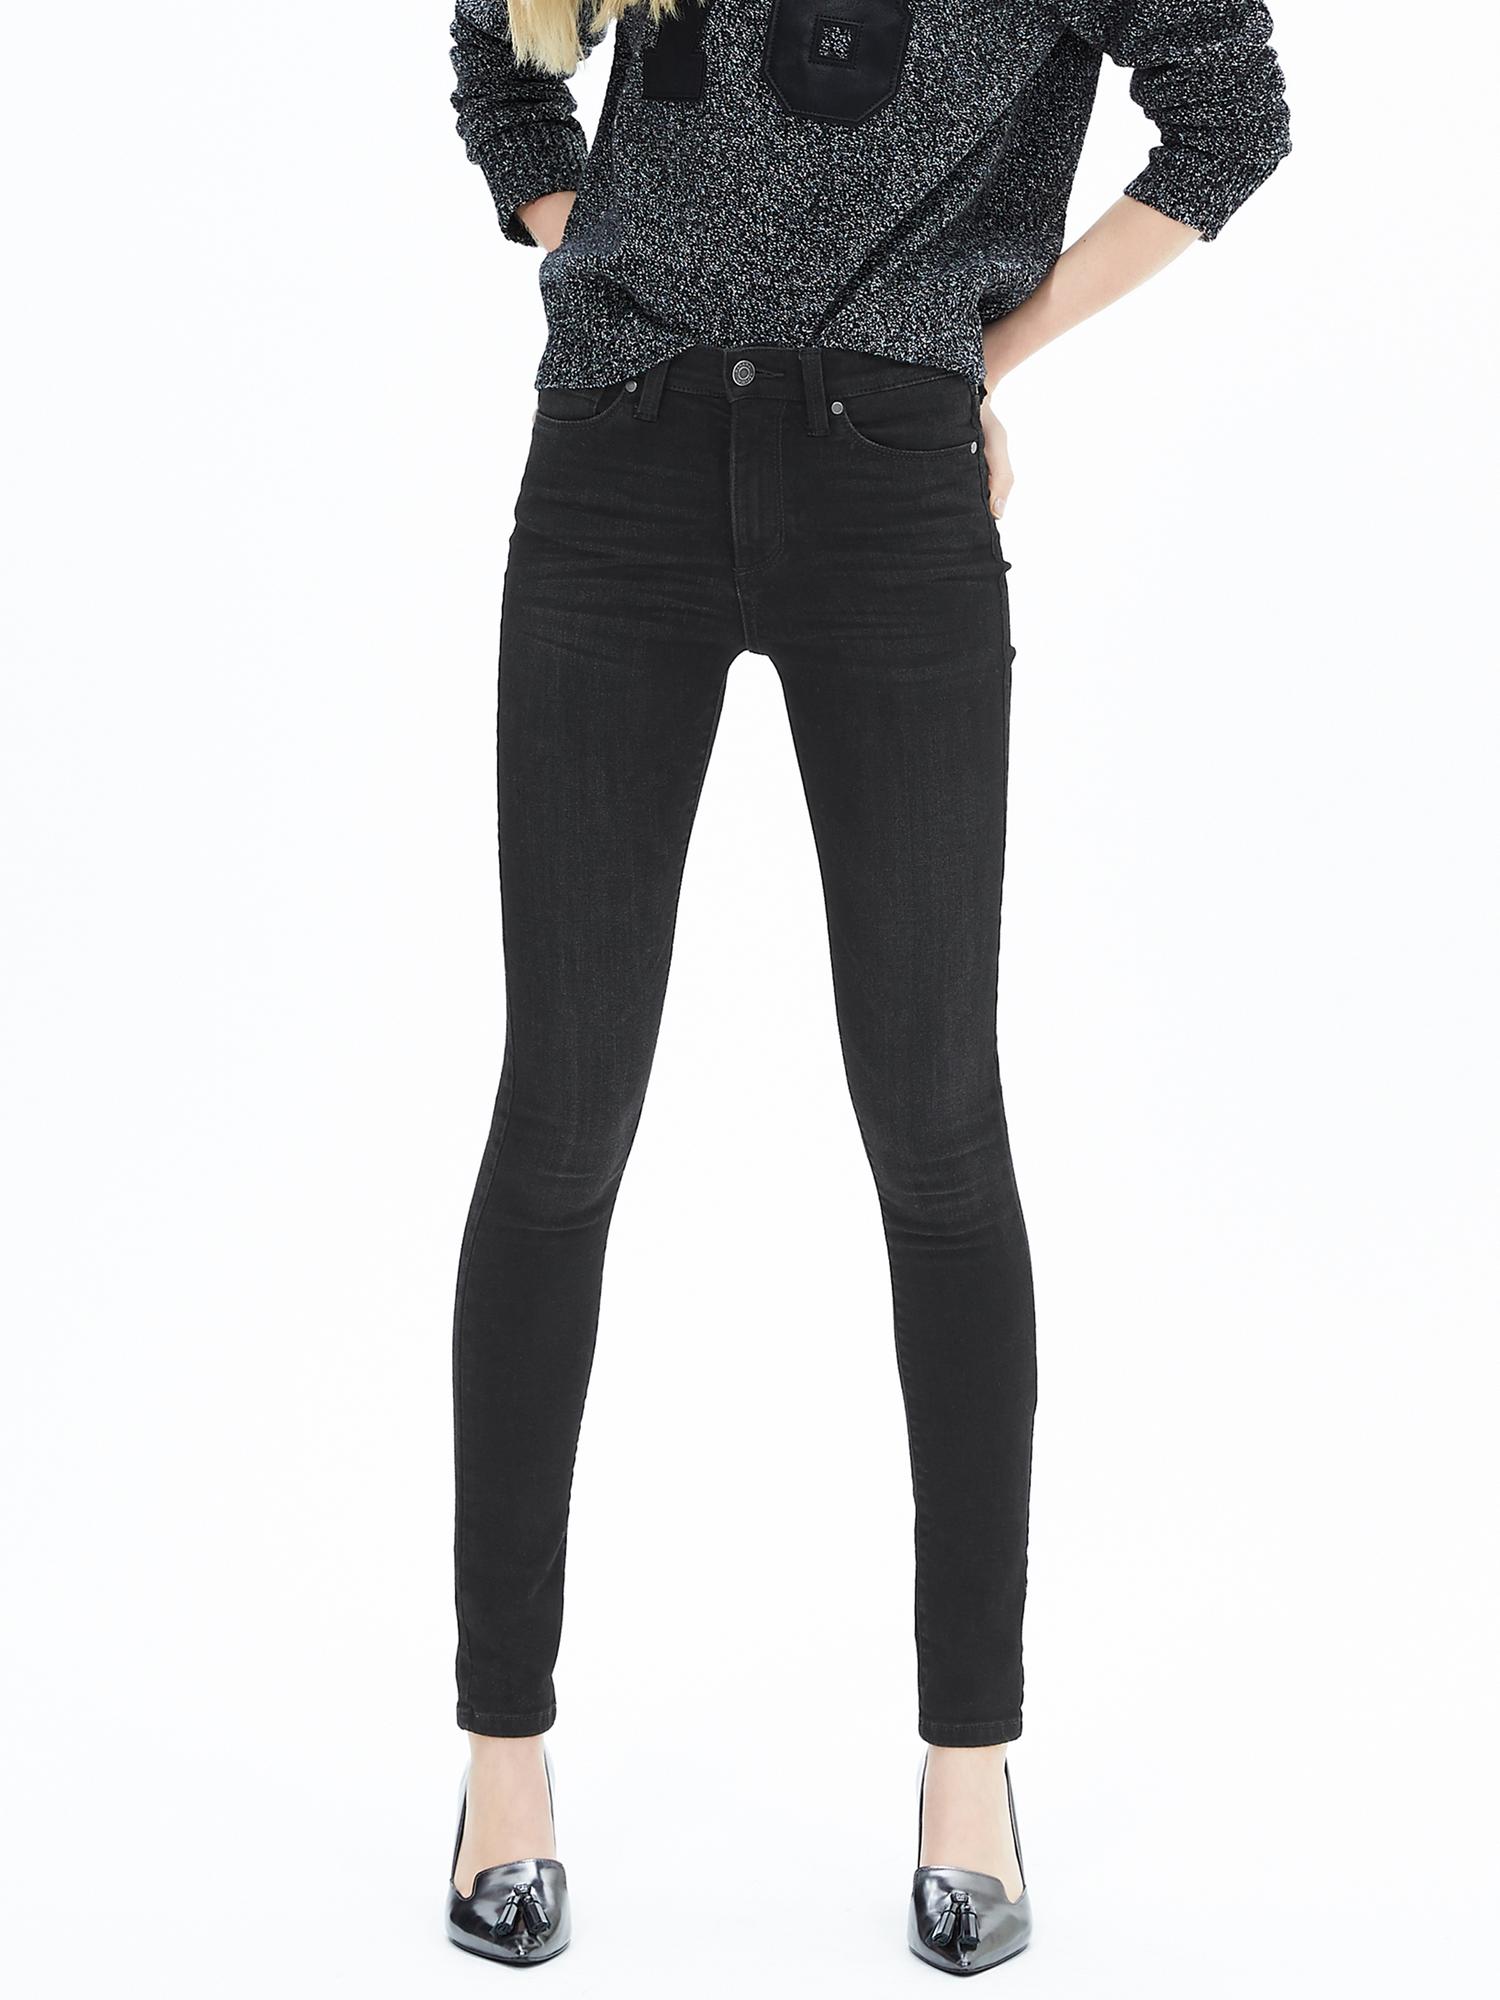 Black High-Waist Skinny Jean